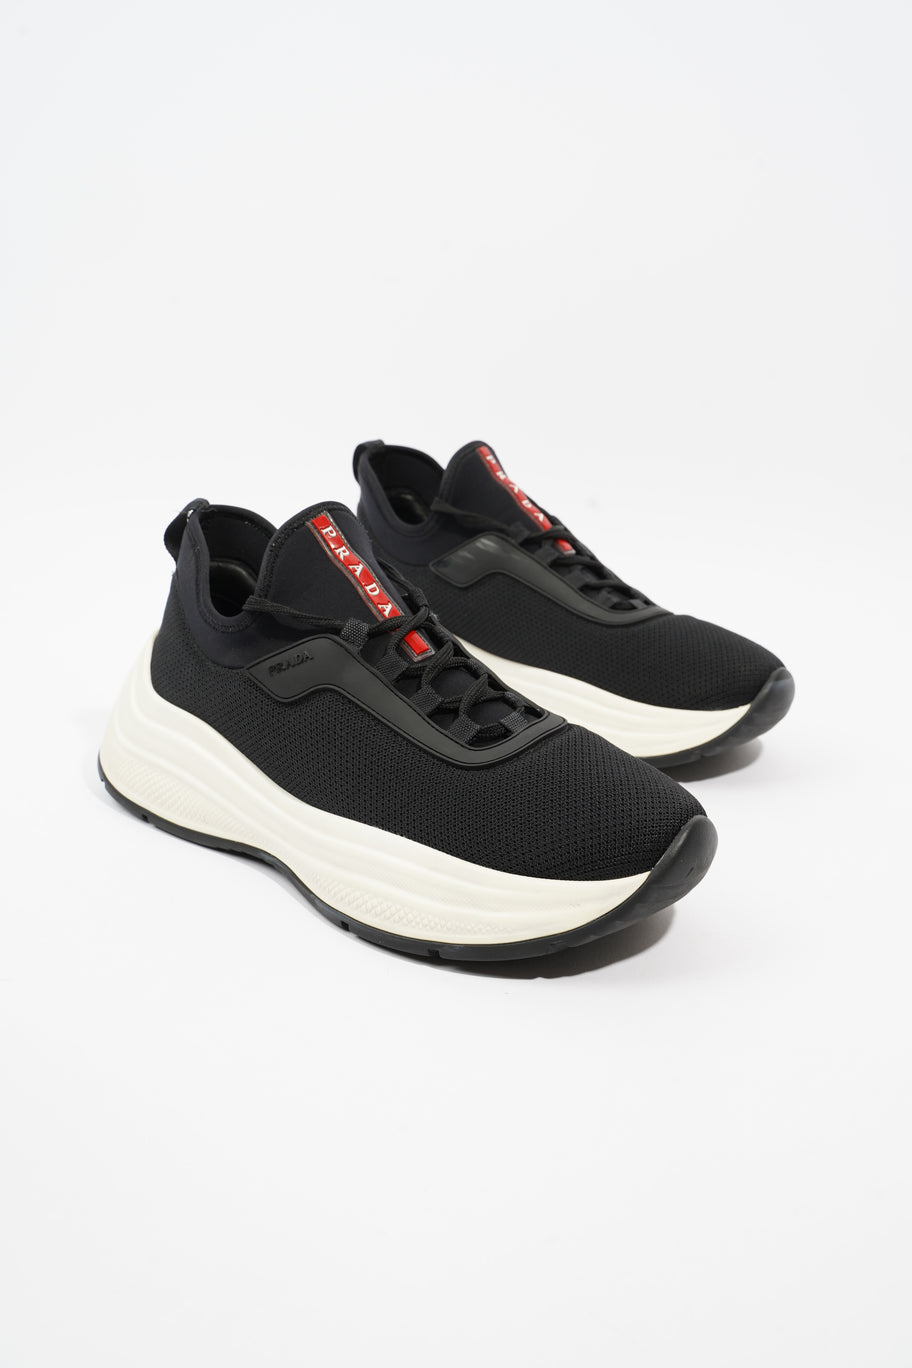 Neoprene Sneakers Black / Red Technical Fabric EU 40 UK 6 Image 2